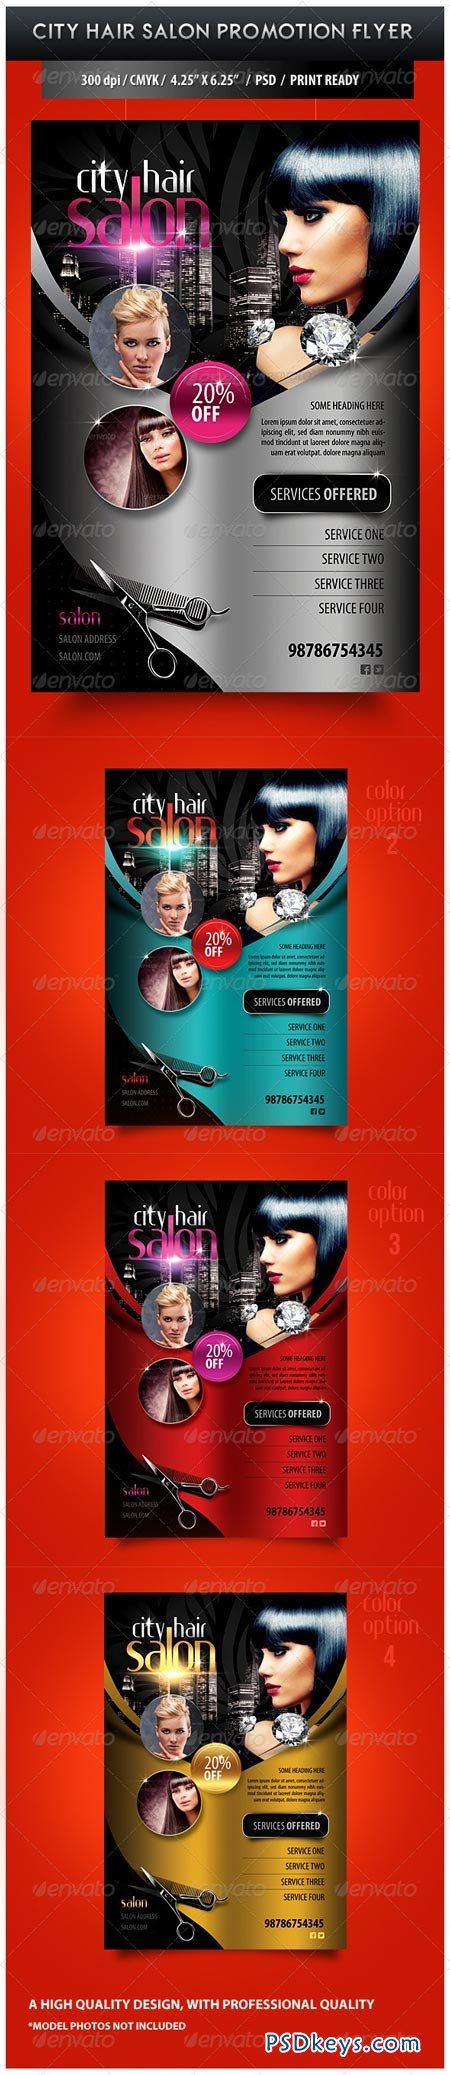 City Hair Salon Promotional Flyer 3674308